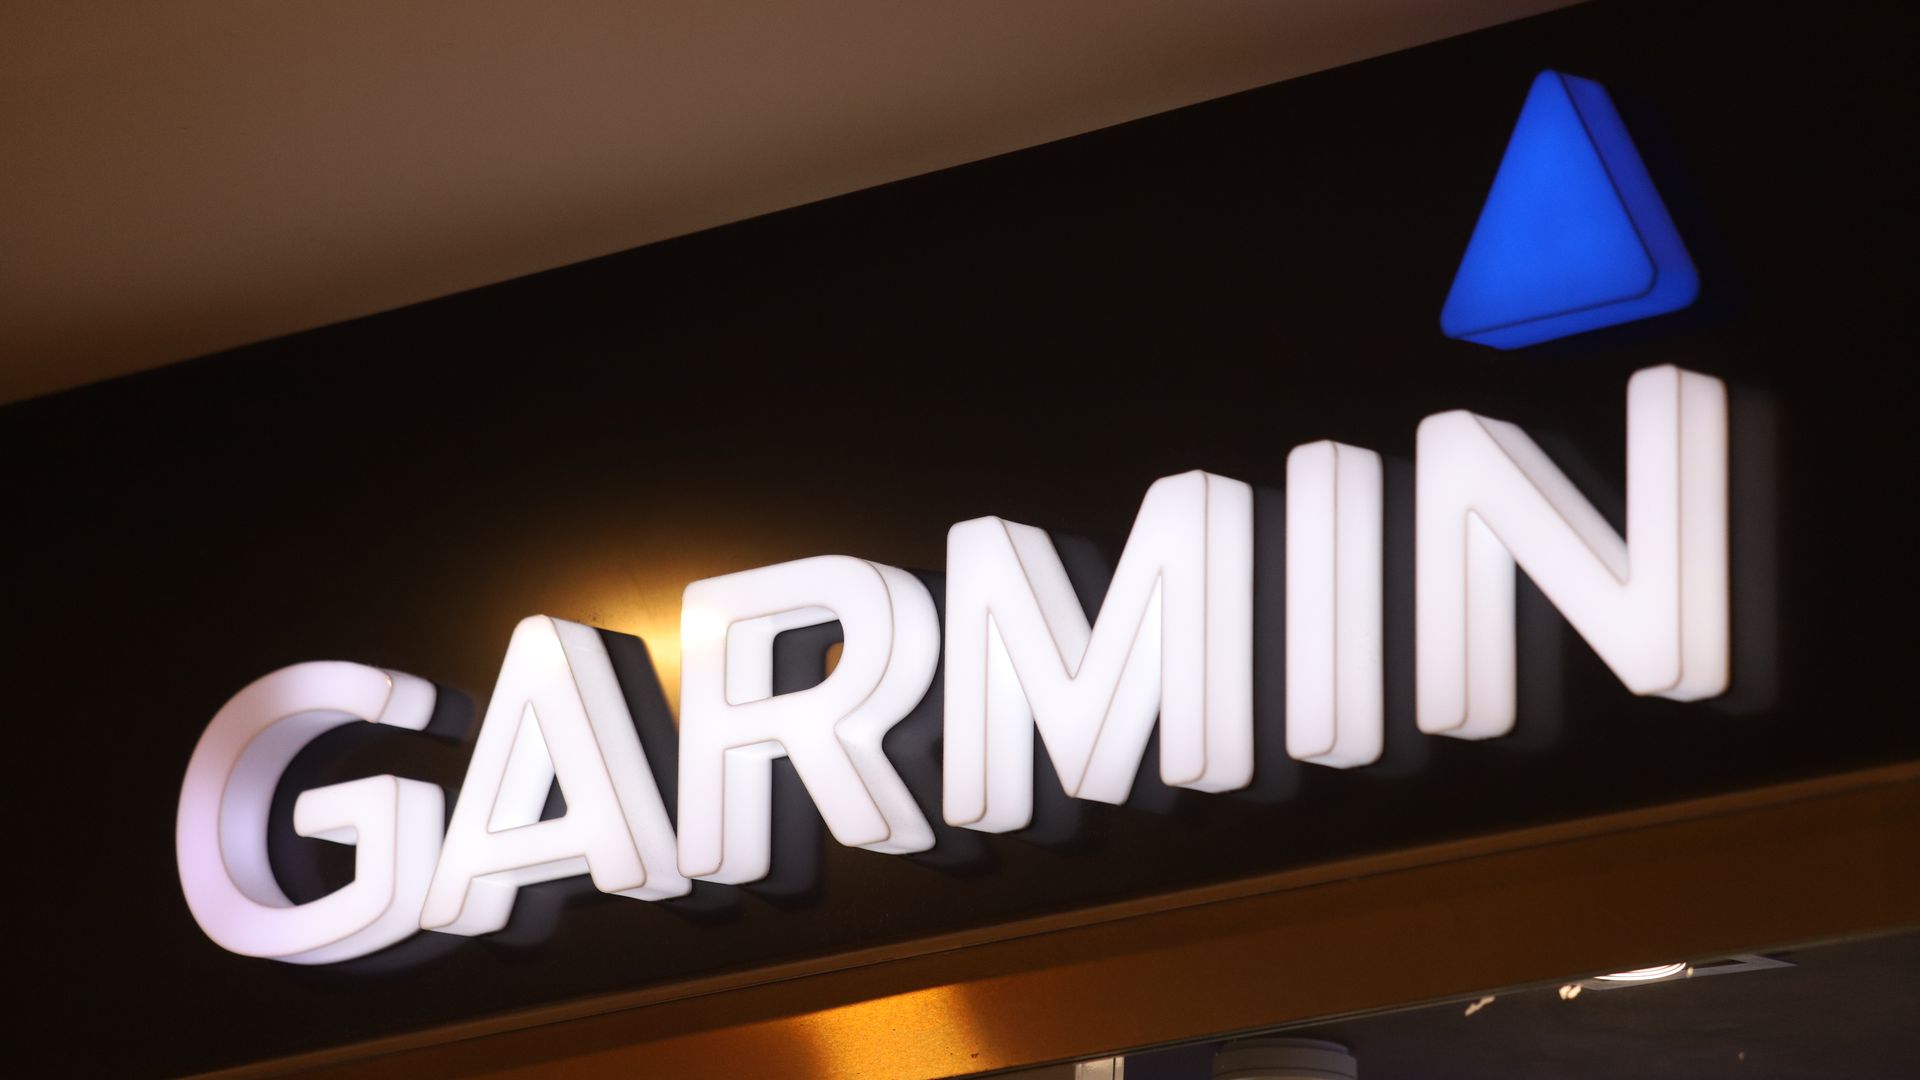 The Garmin logo on a storefront.